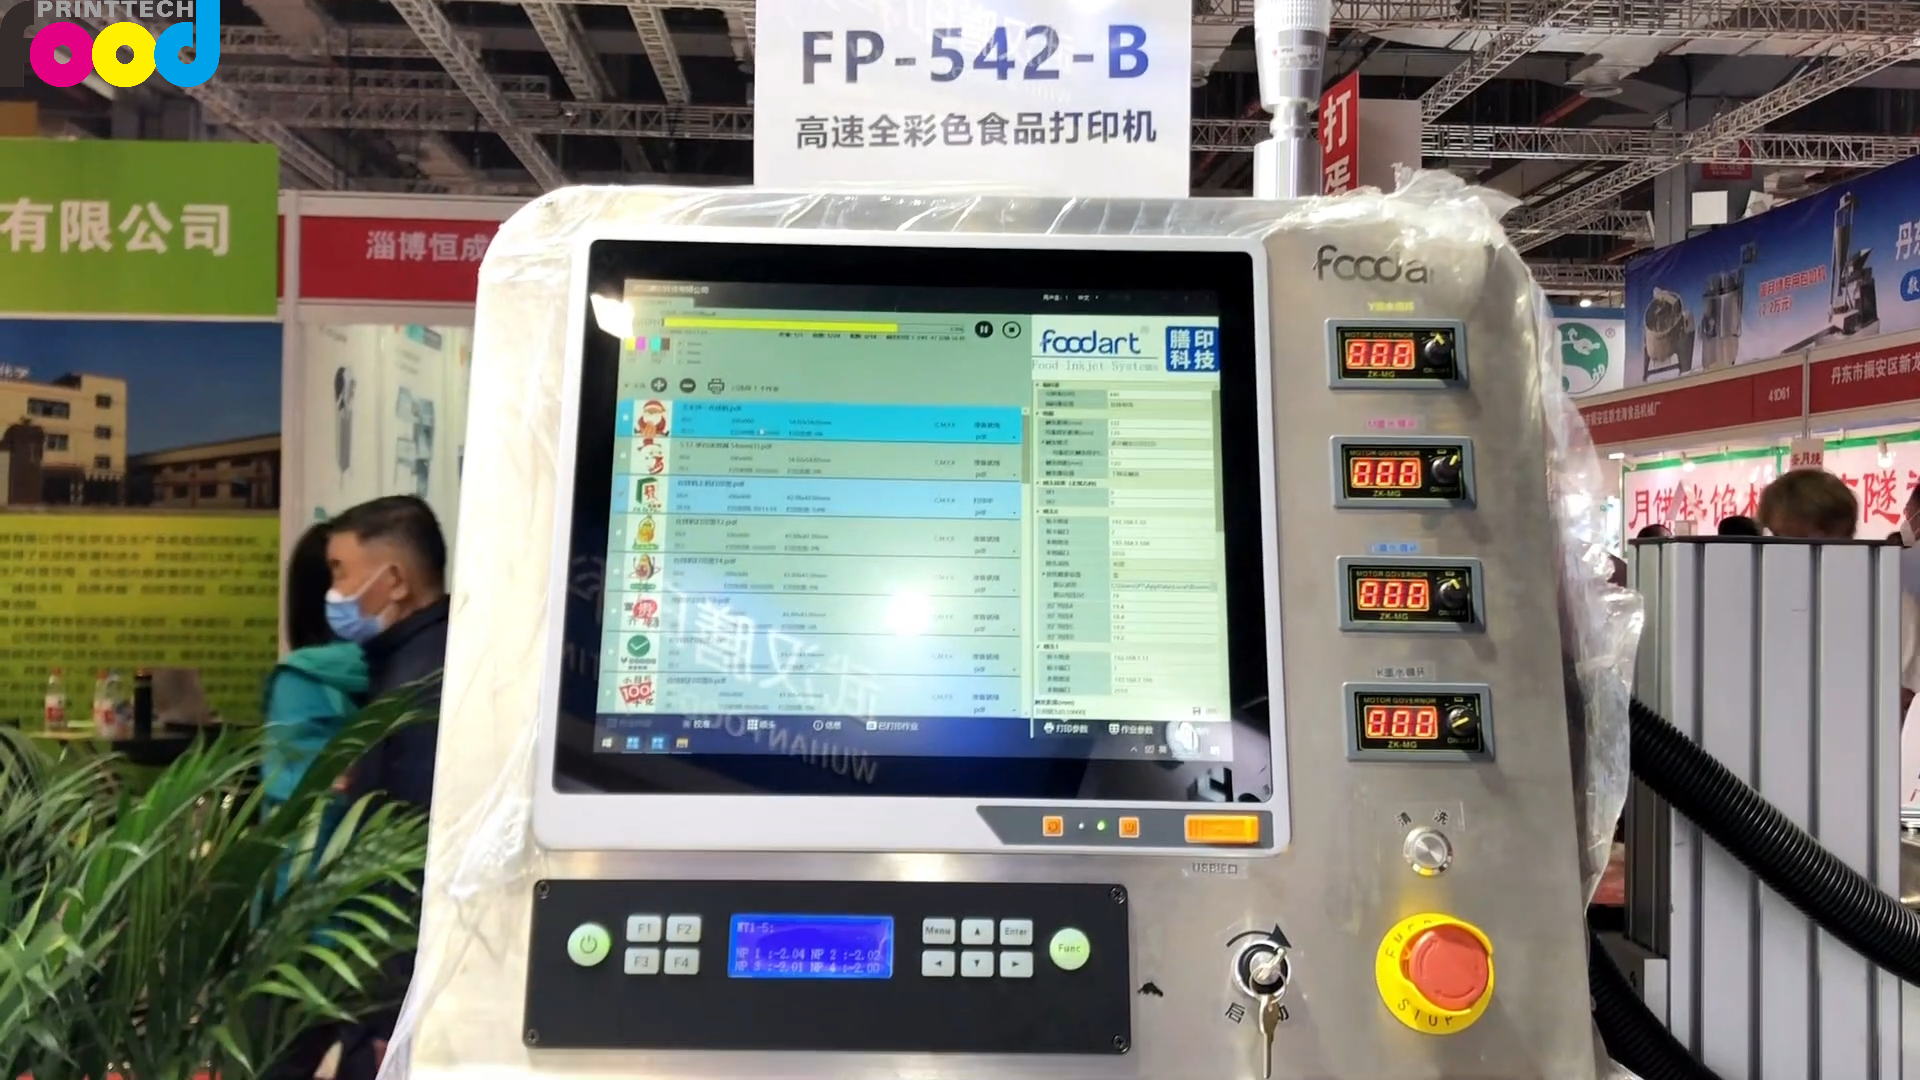 FP-542-B full color high-speed food printer